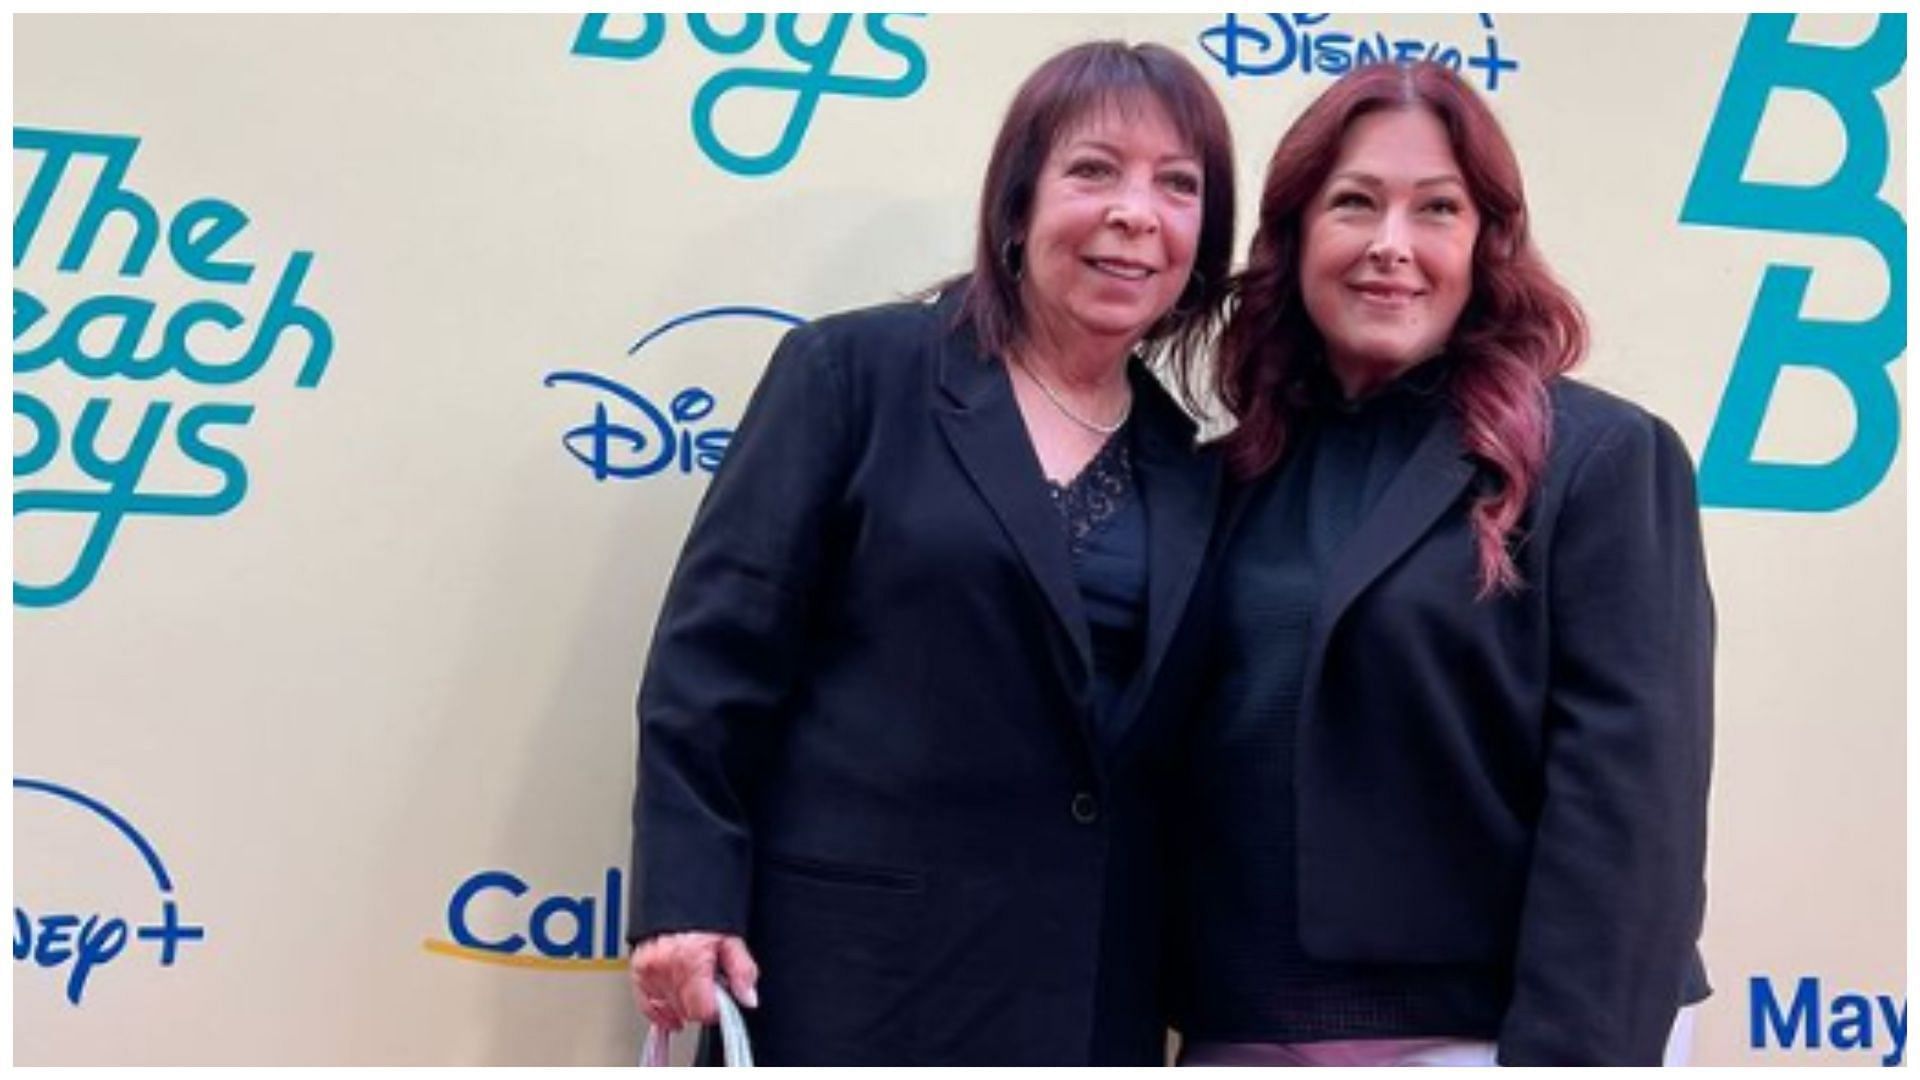 Carnie Wilson alongside her mother at the documentary premiere (Image via Instagram/@disneystudios)